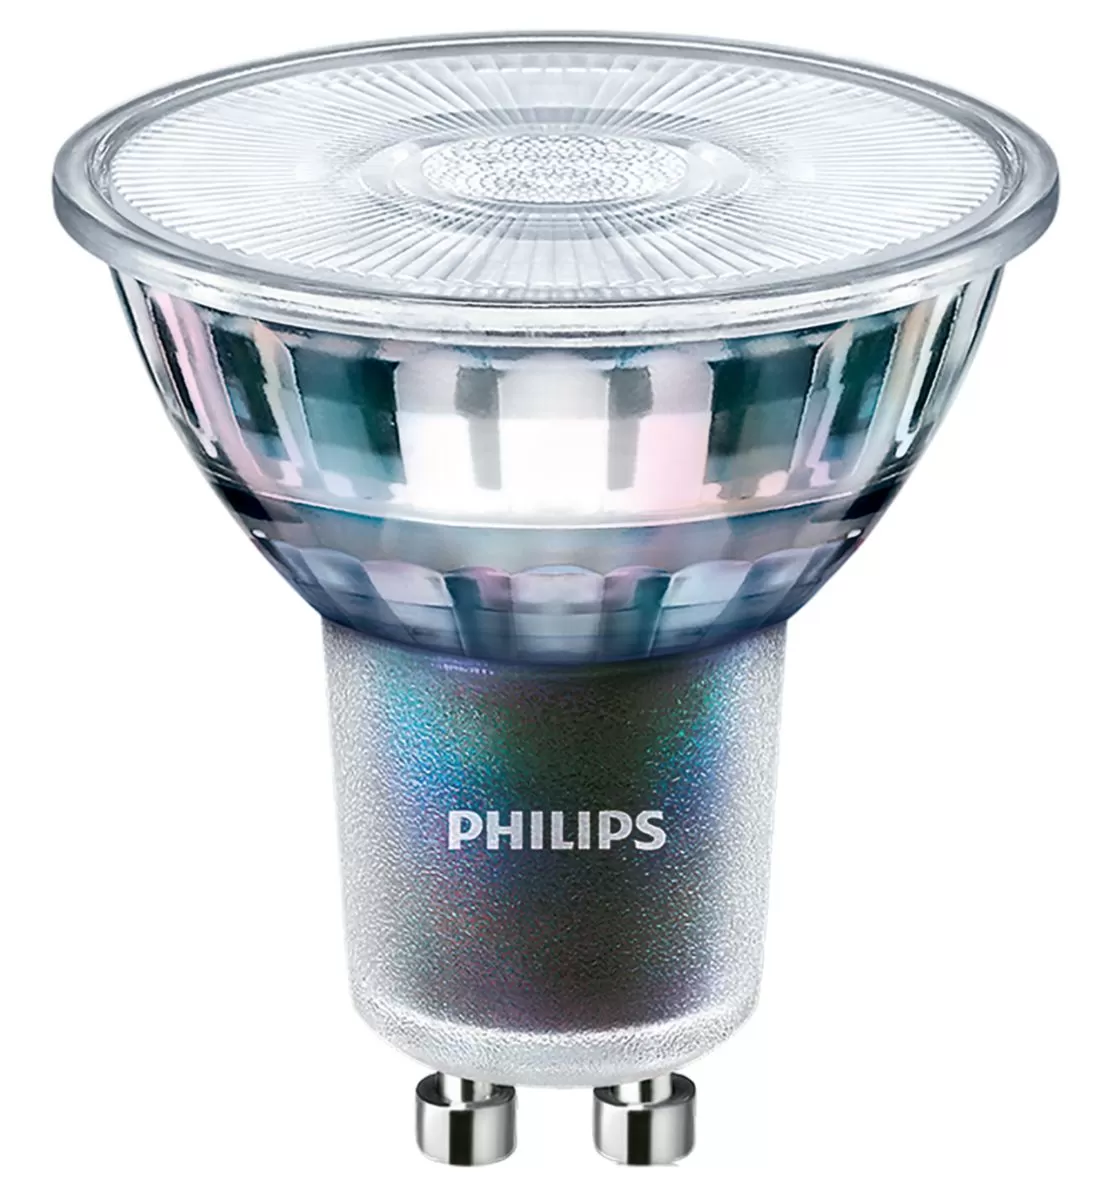 Signify MASTER LEDspot GU10 ExpertColor - LED-lamp/Multi-LED - Energieeffizienz-Label (EEL): A+ - Ähnlichste Farbtemperatur (Nom): 3000 K 70757900